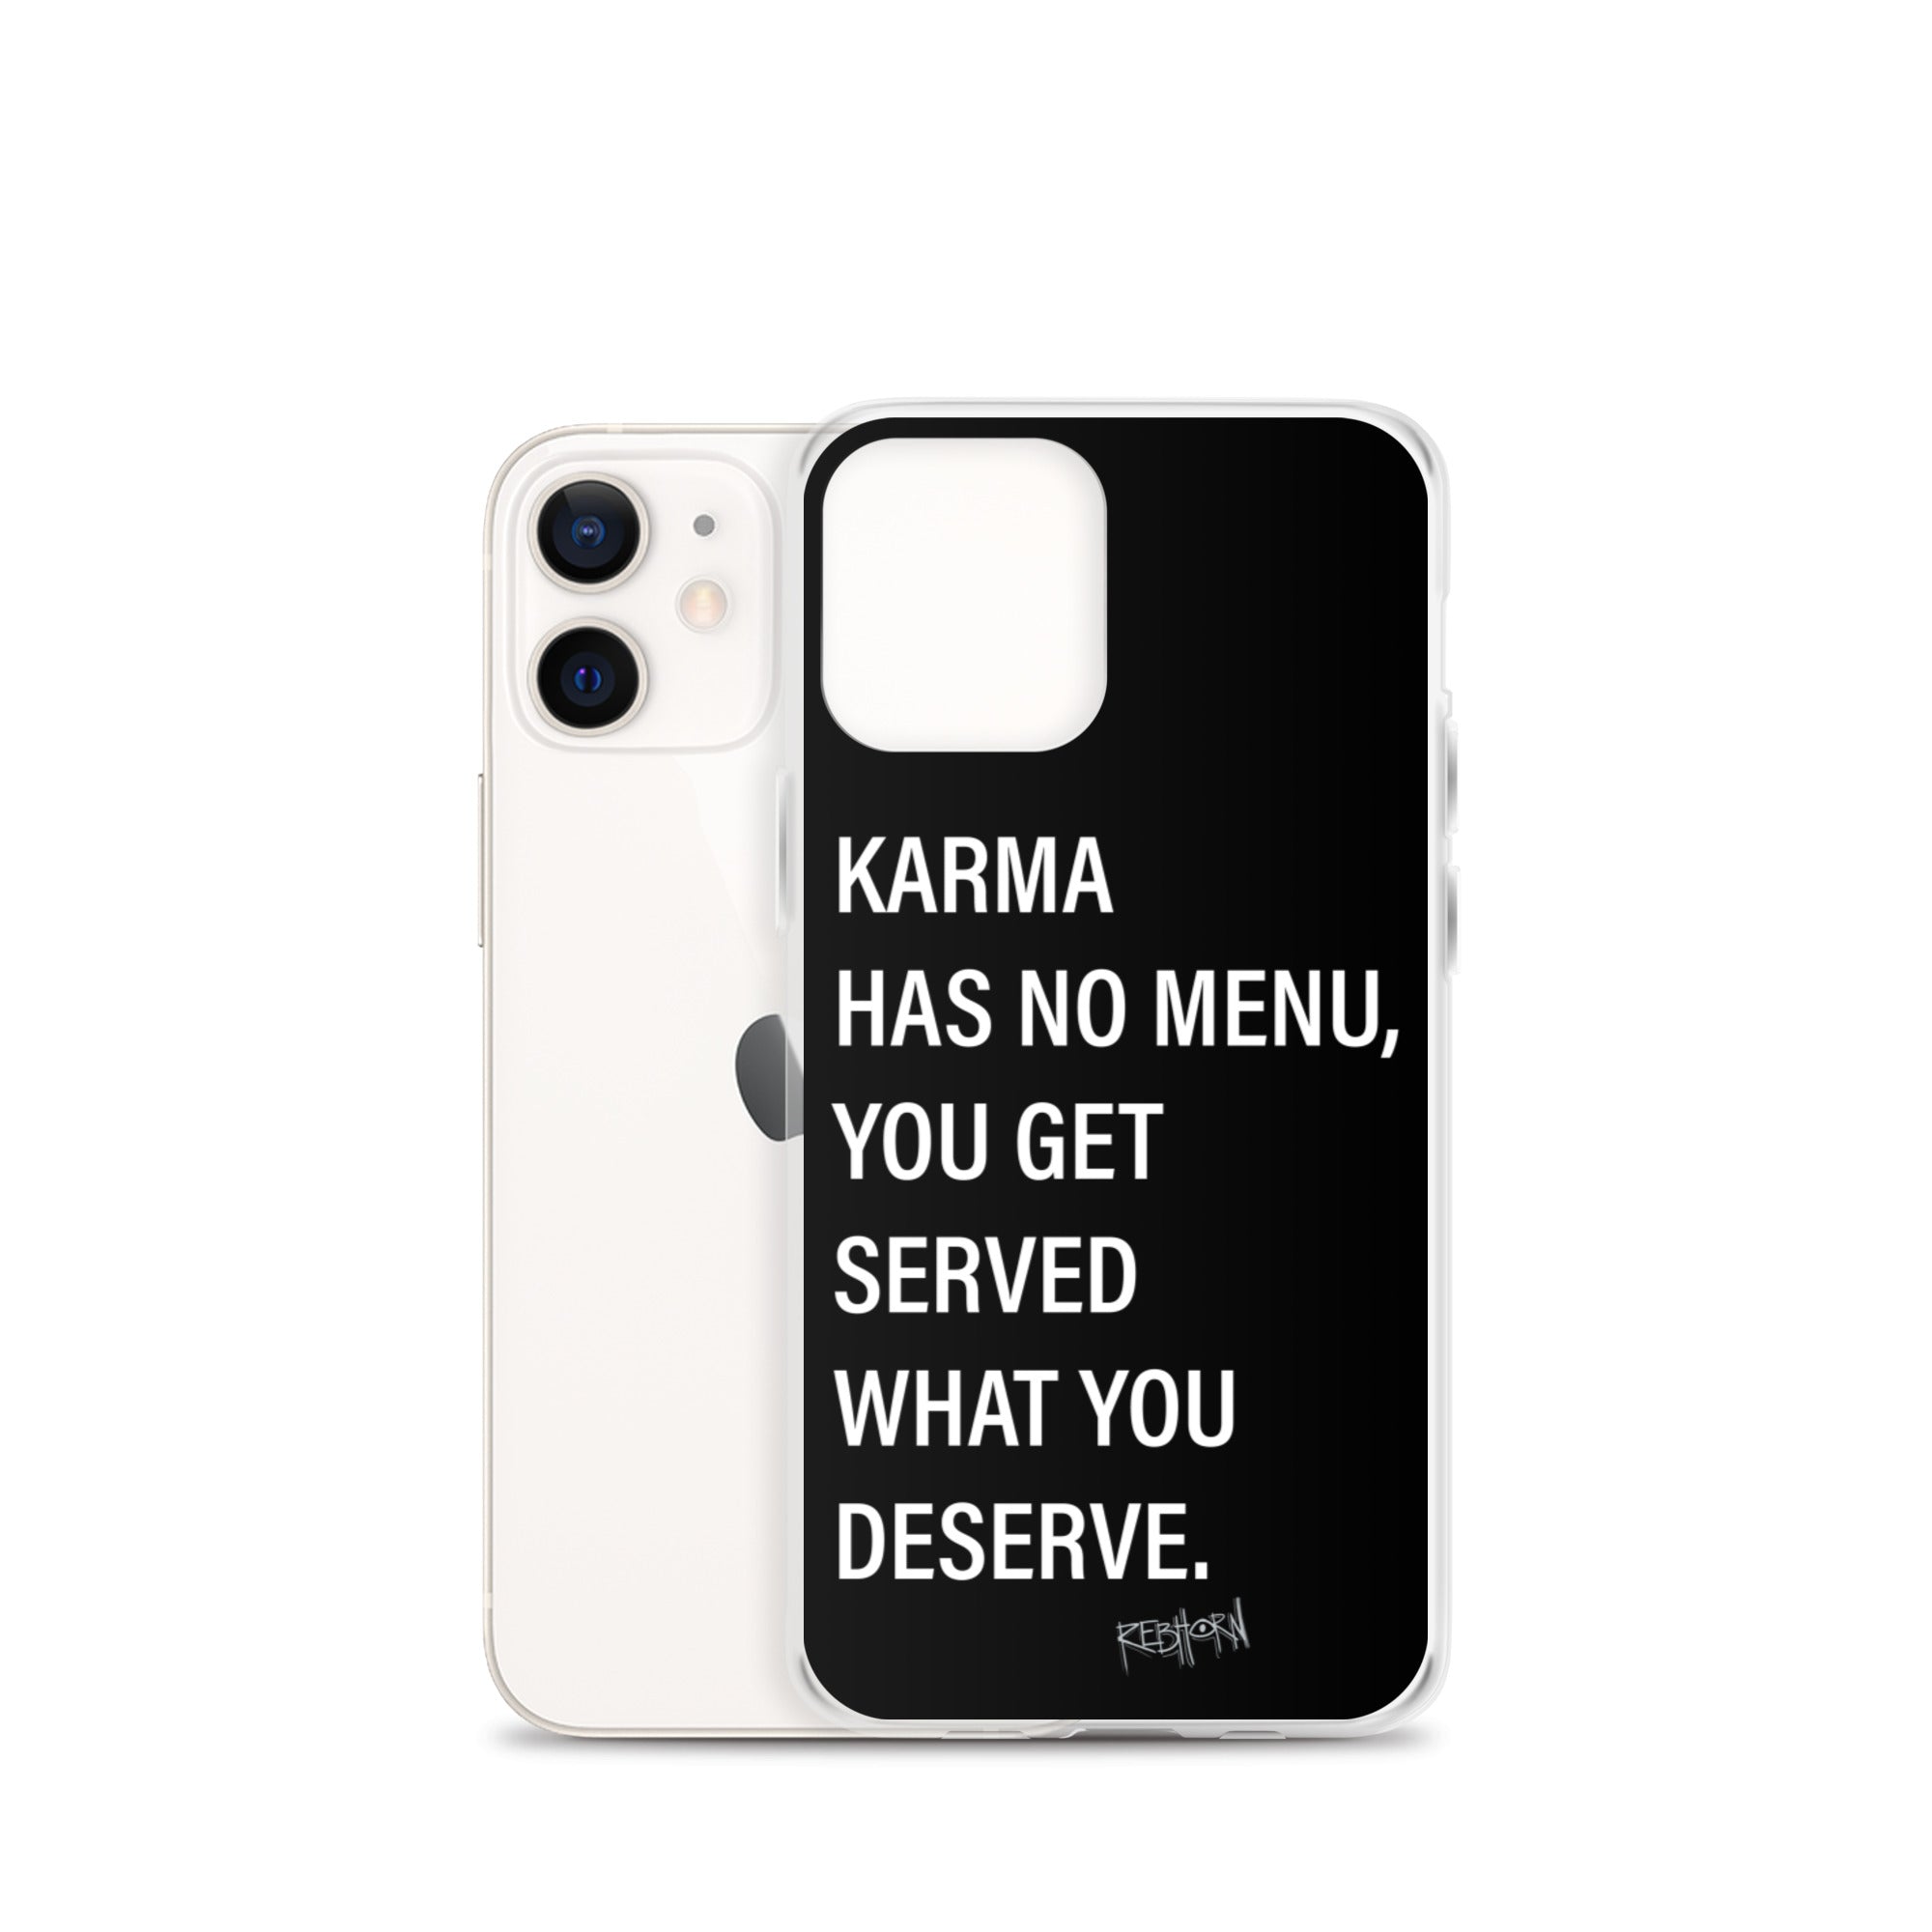 Karma Has No Menu iPhone Case - REBHORN DESIGN